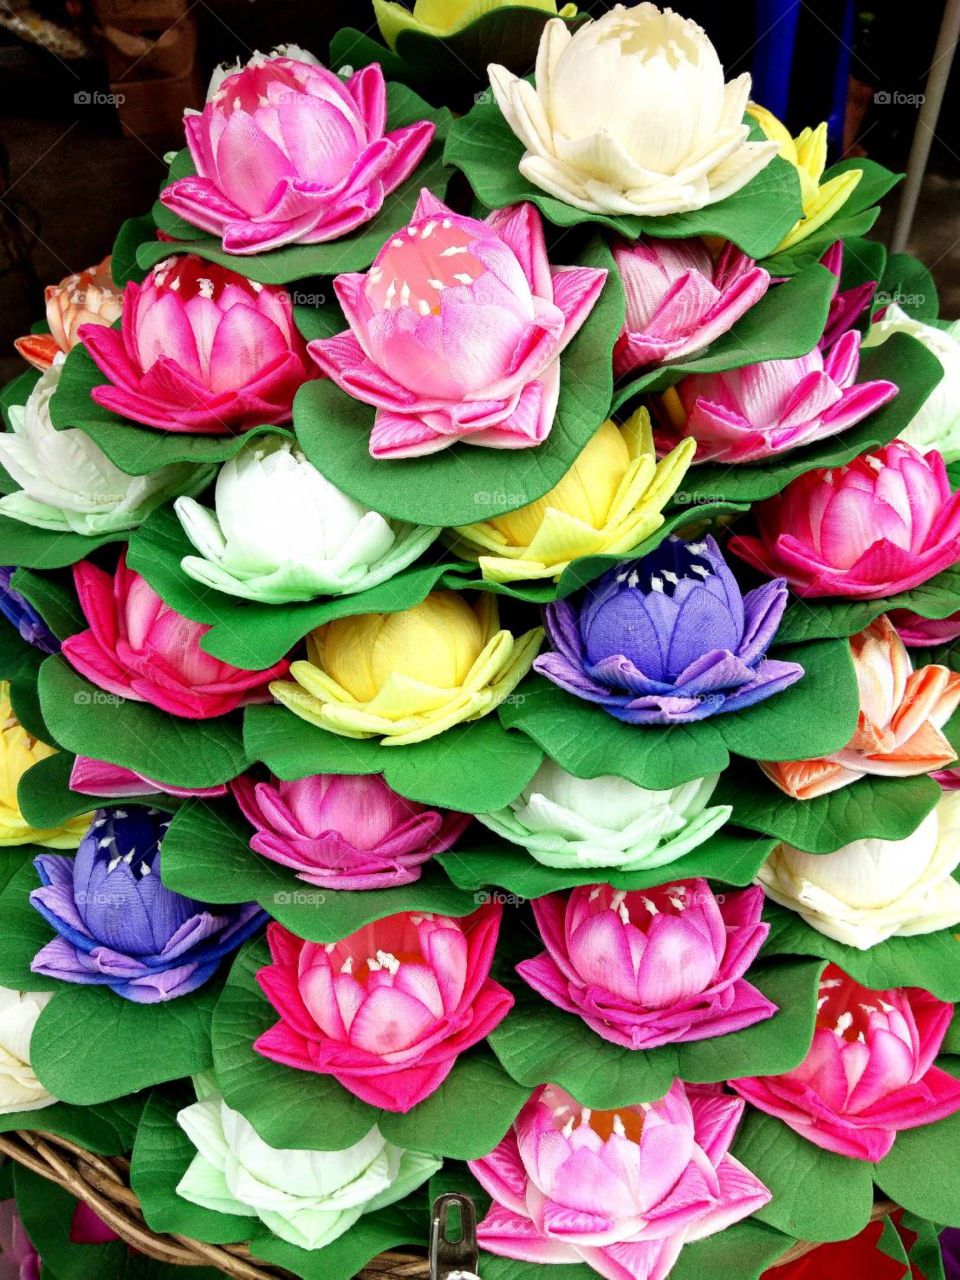 Colorful Lotus at JJ market